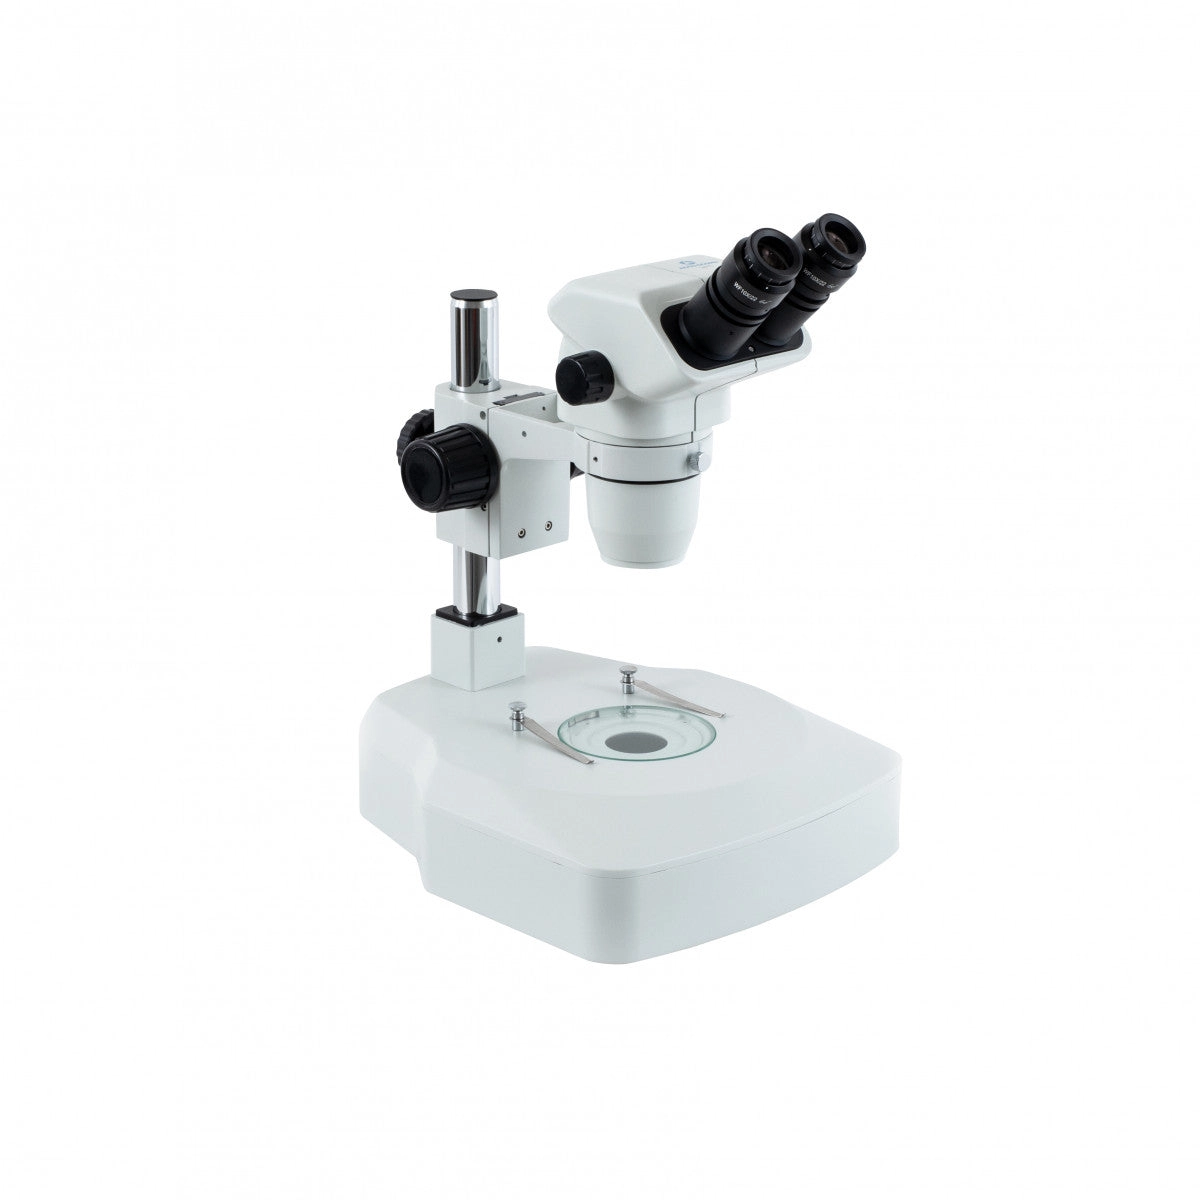 ACCU-SCOPE 3075 Binocular Zoom Stereo Microscope on Advanced Diascopic Stand